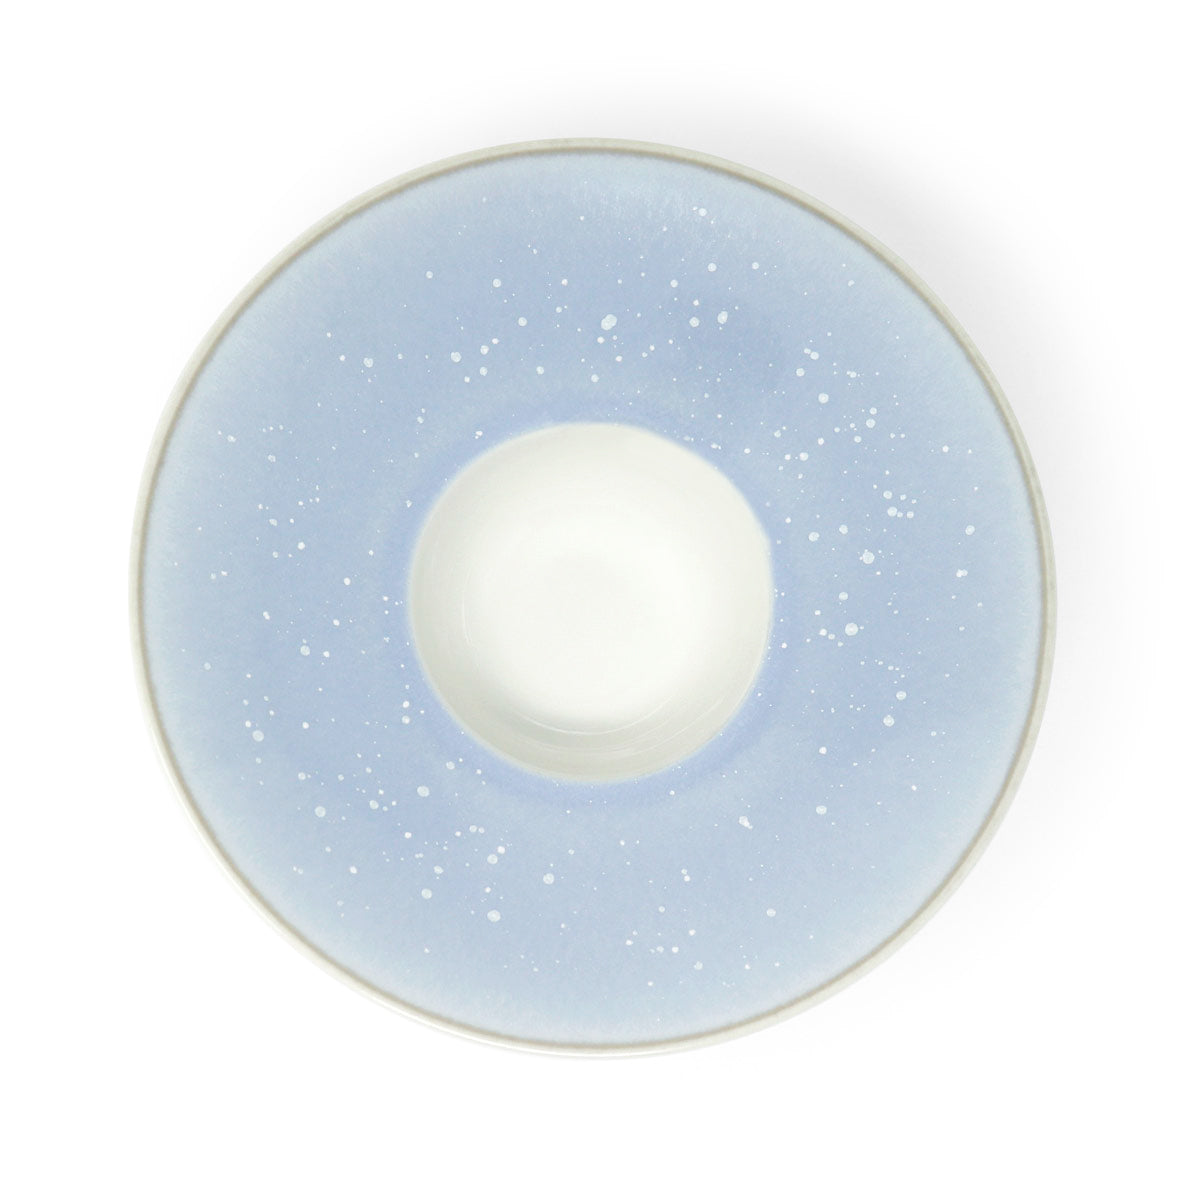 SONG Ocean - Rim soup plate, large